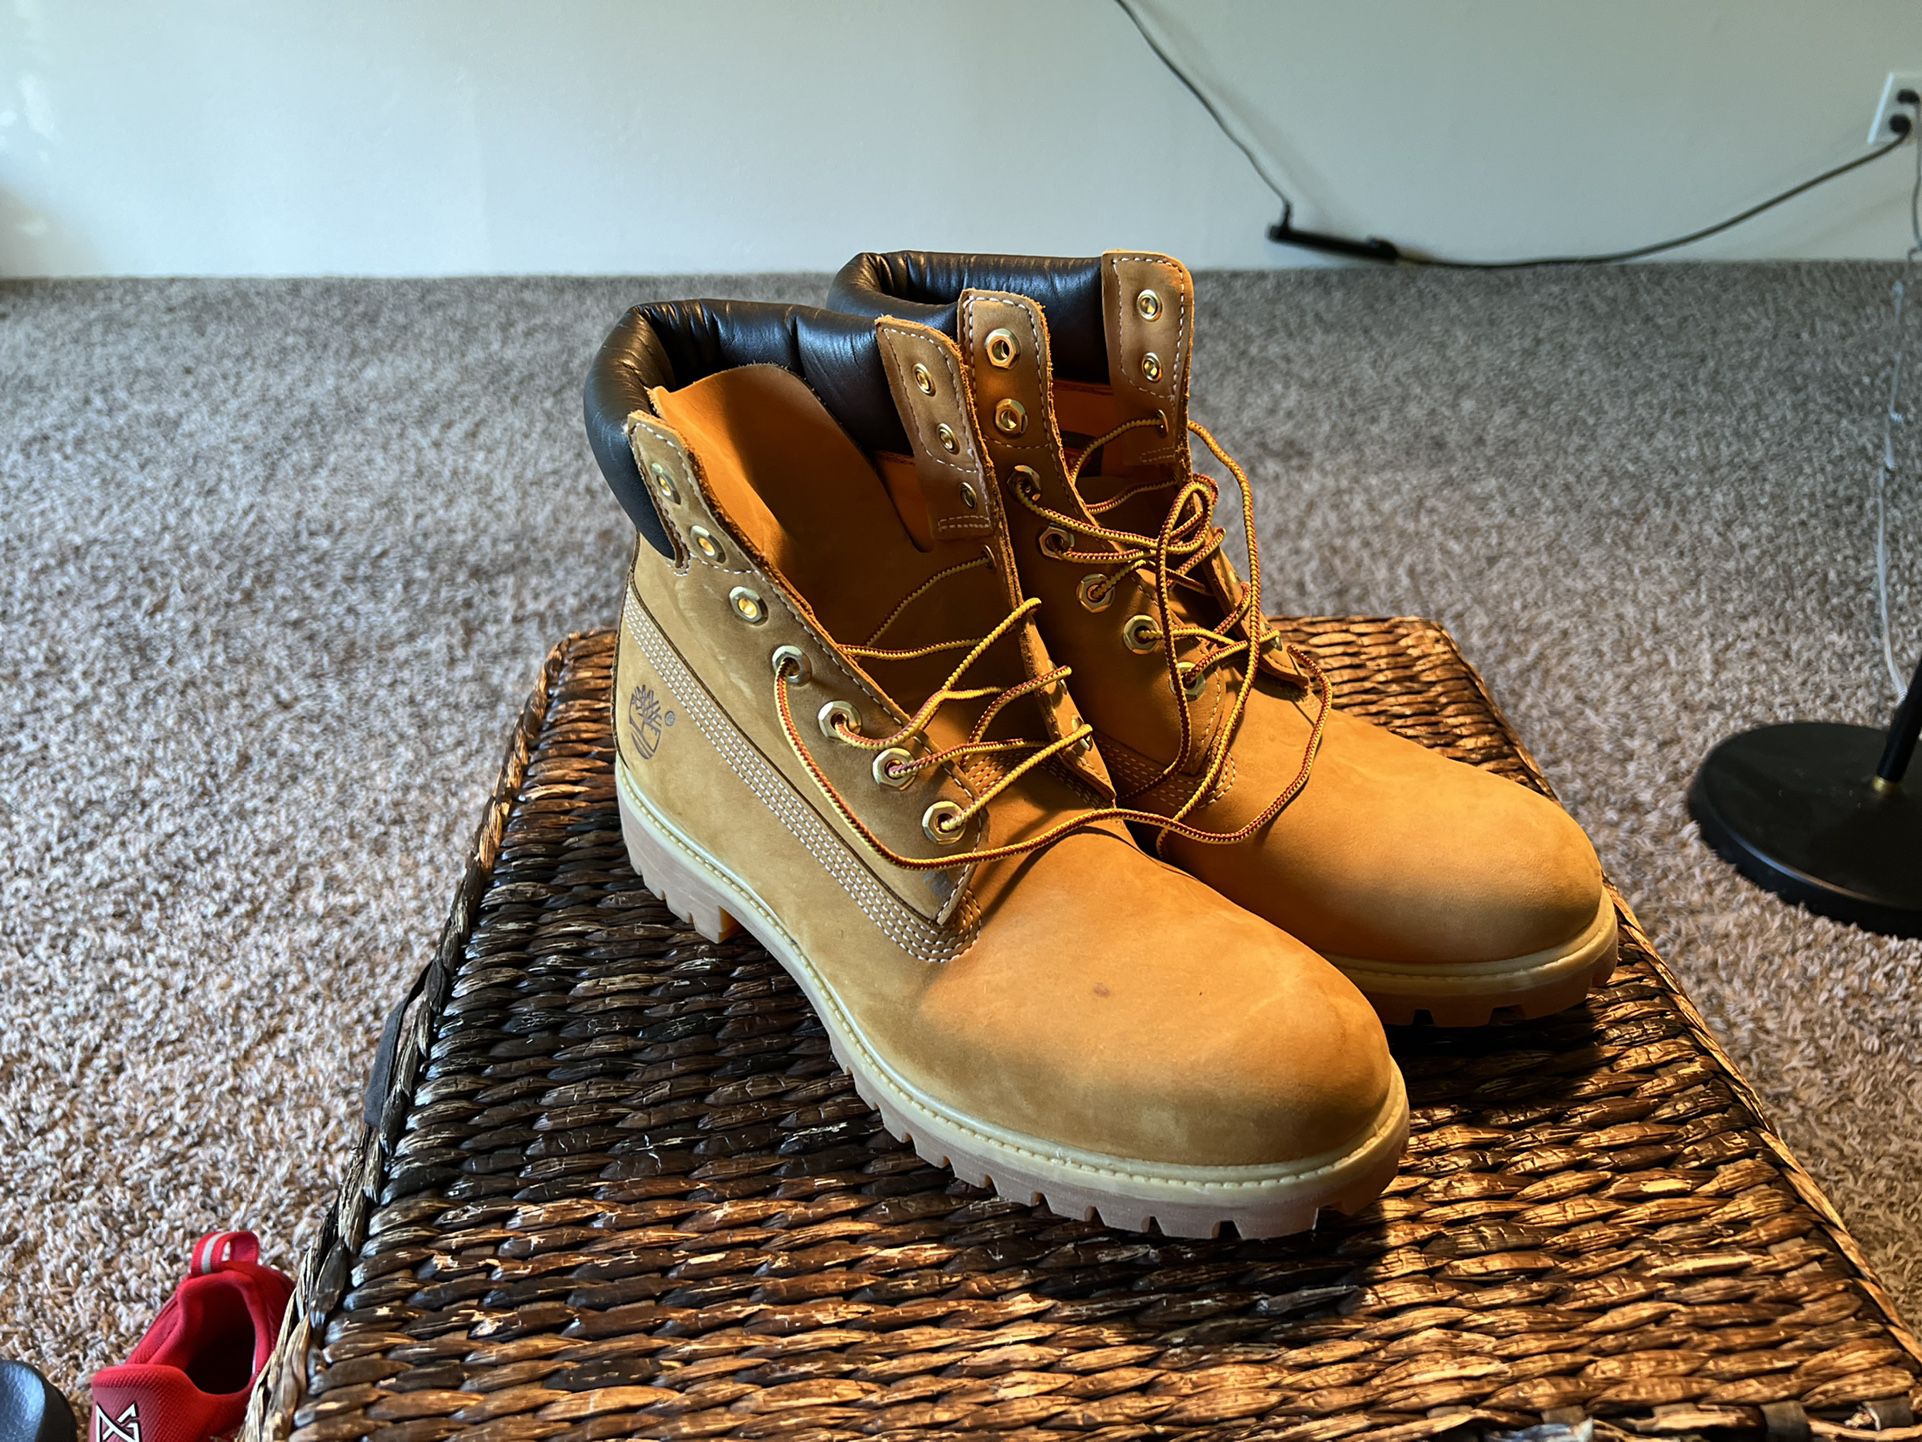 Timberland Mens Premium Boots Size 10